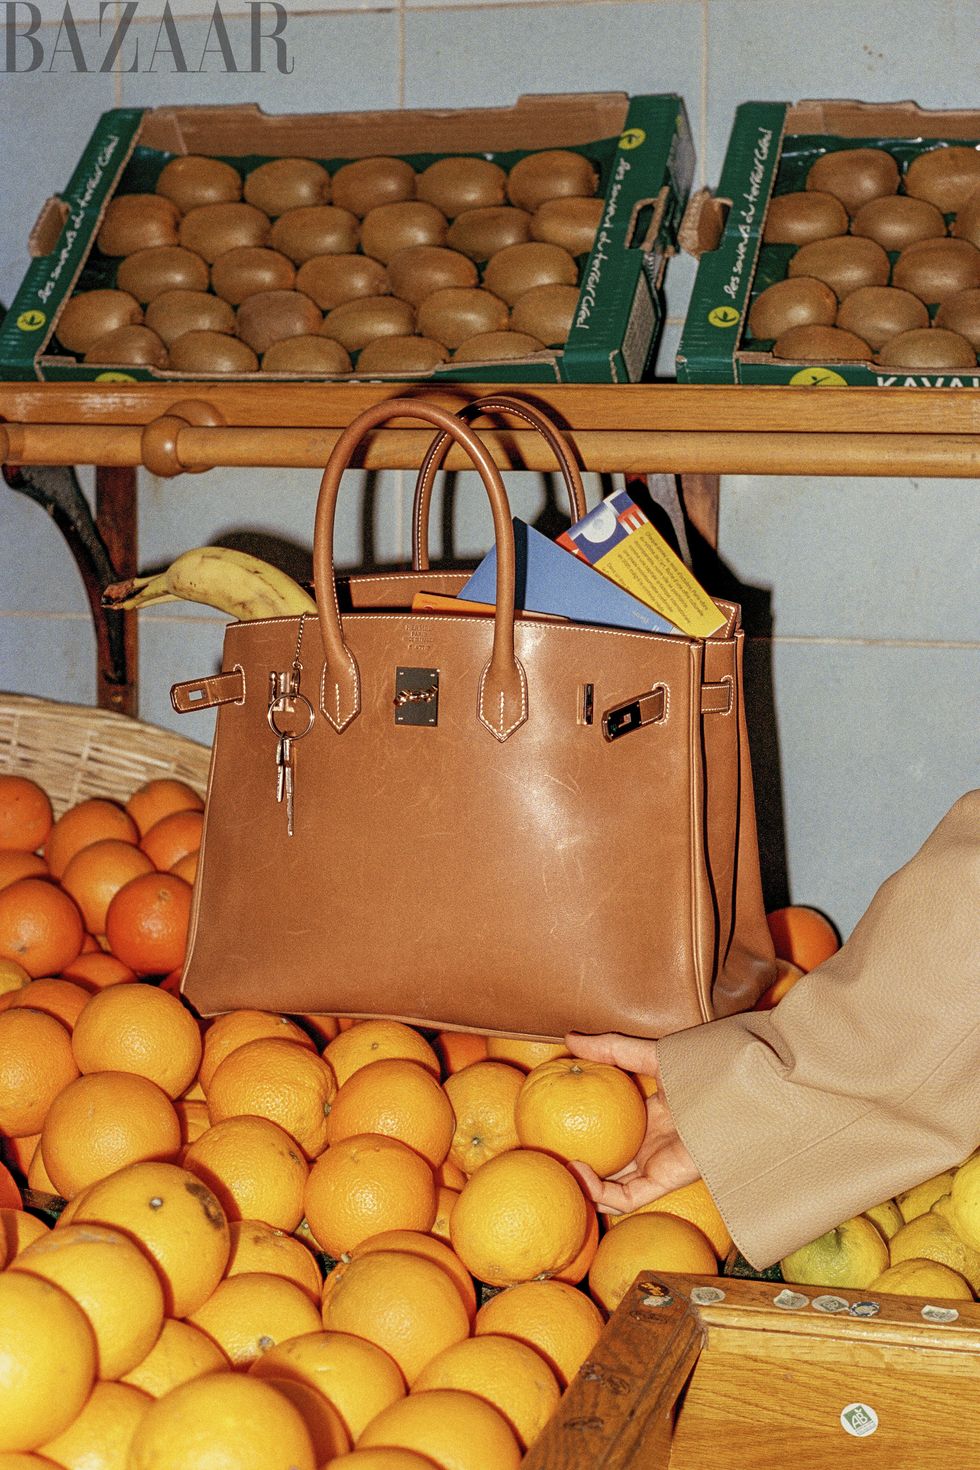 Handbag closets and walk-in wardrobes are so passe' - Kris Jenner